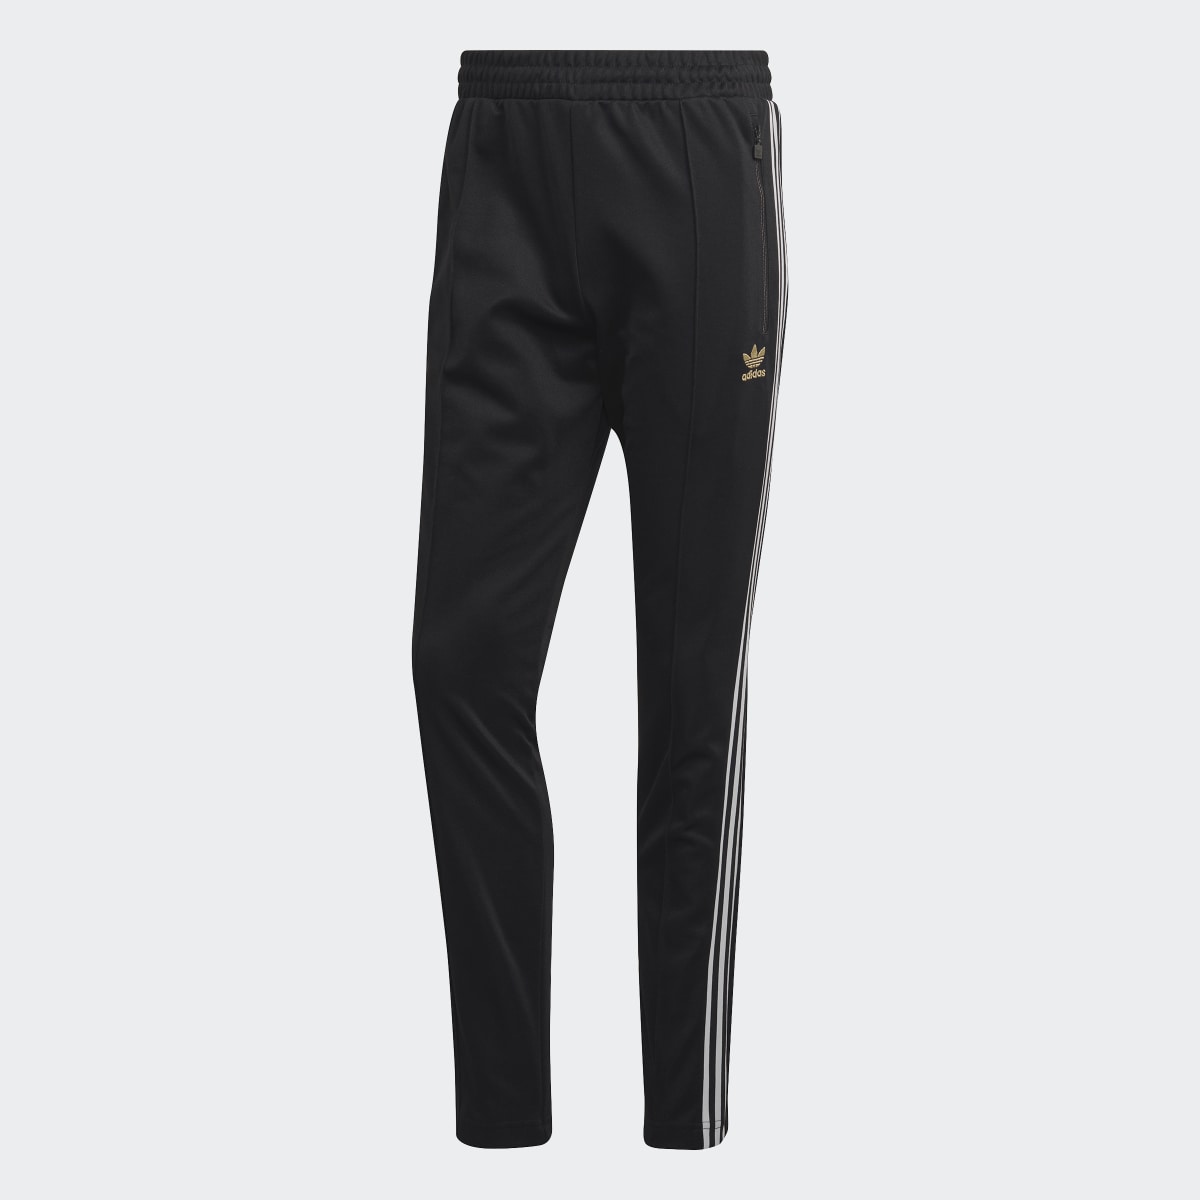 Adidas Pantalon de survêtement Beckenbauer. 4